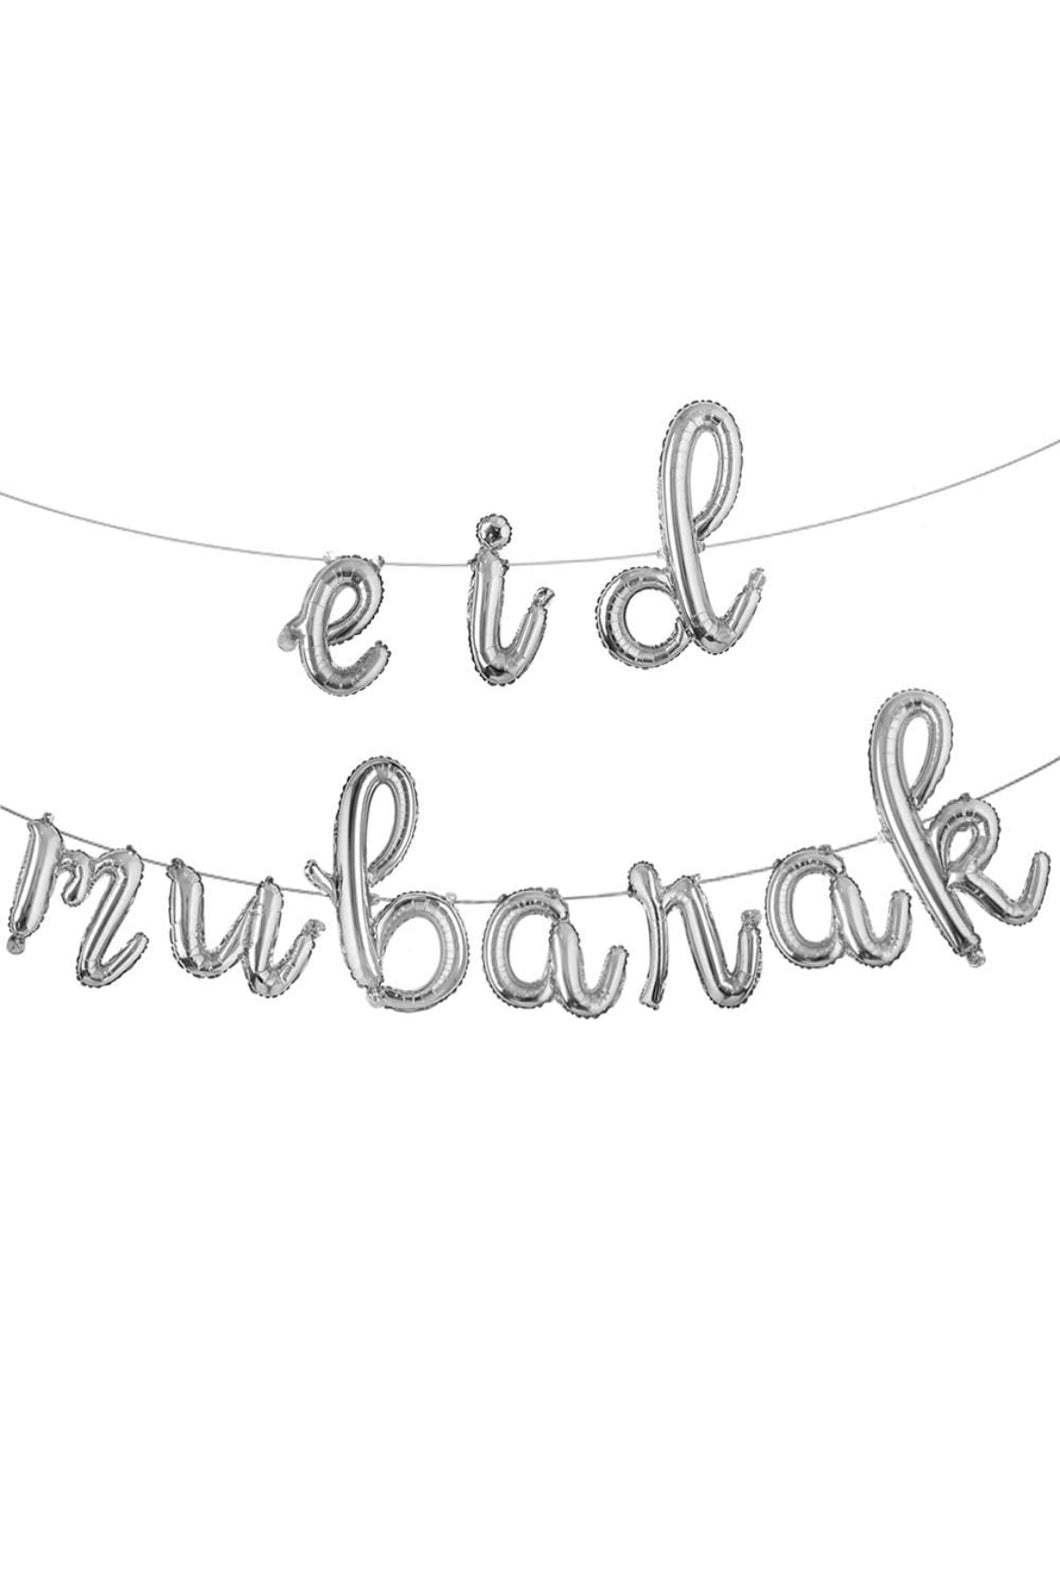 Eid Mubarak balloon banner |cursive